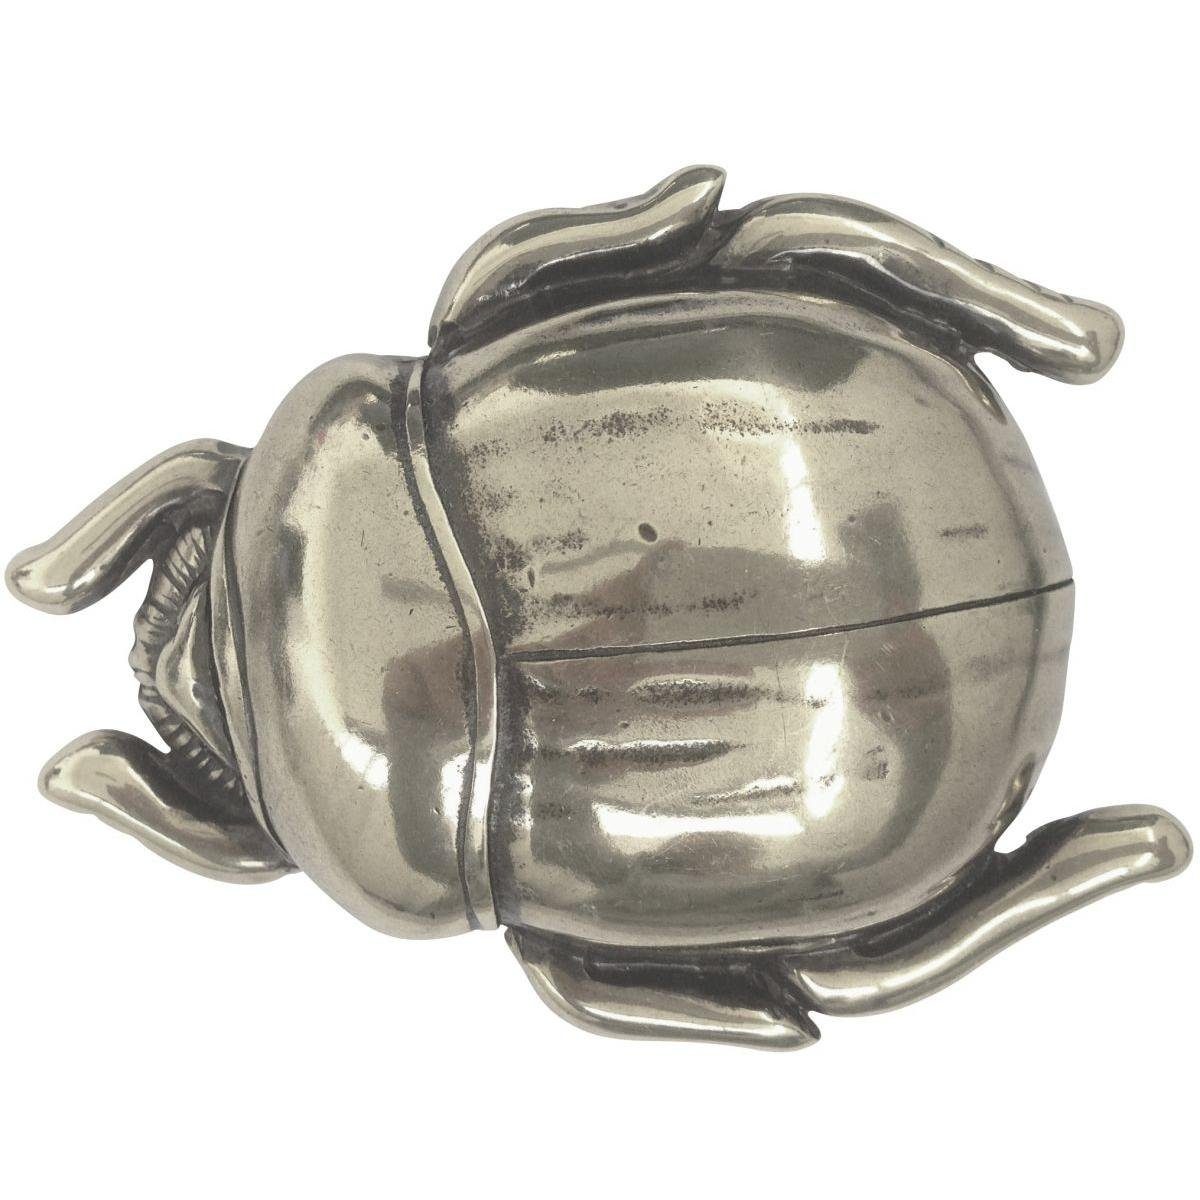 BELTINGER Gürtelschnalle Skarabäus 4,0 cm - Buckle Wechselschließe Gürtelschließe 40mm - Gürtel Silber